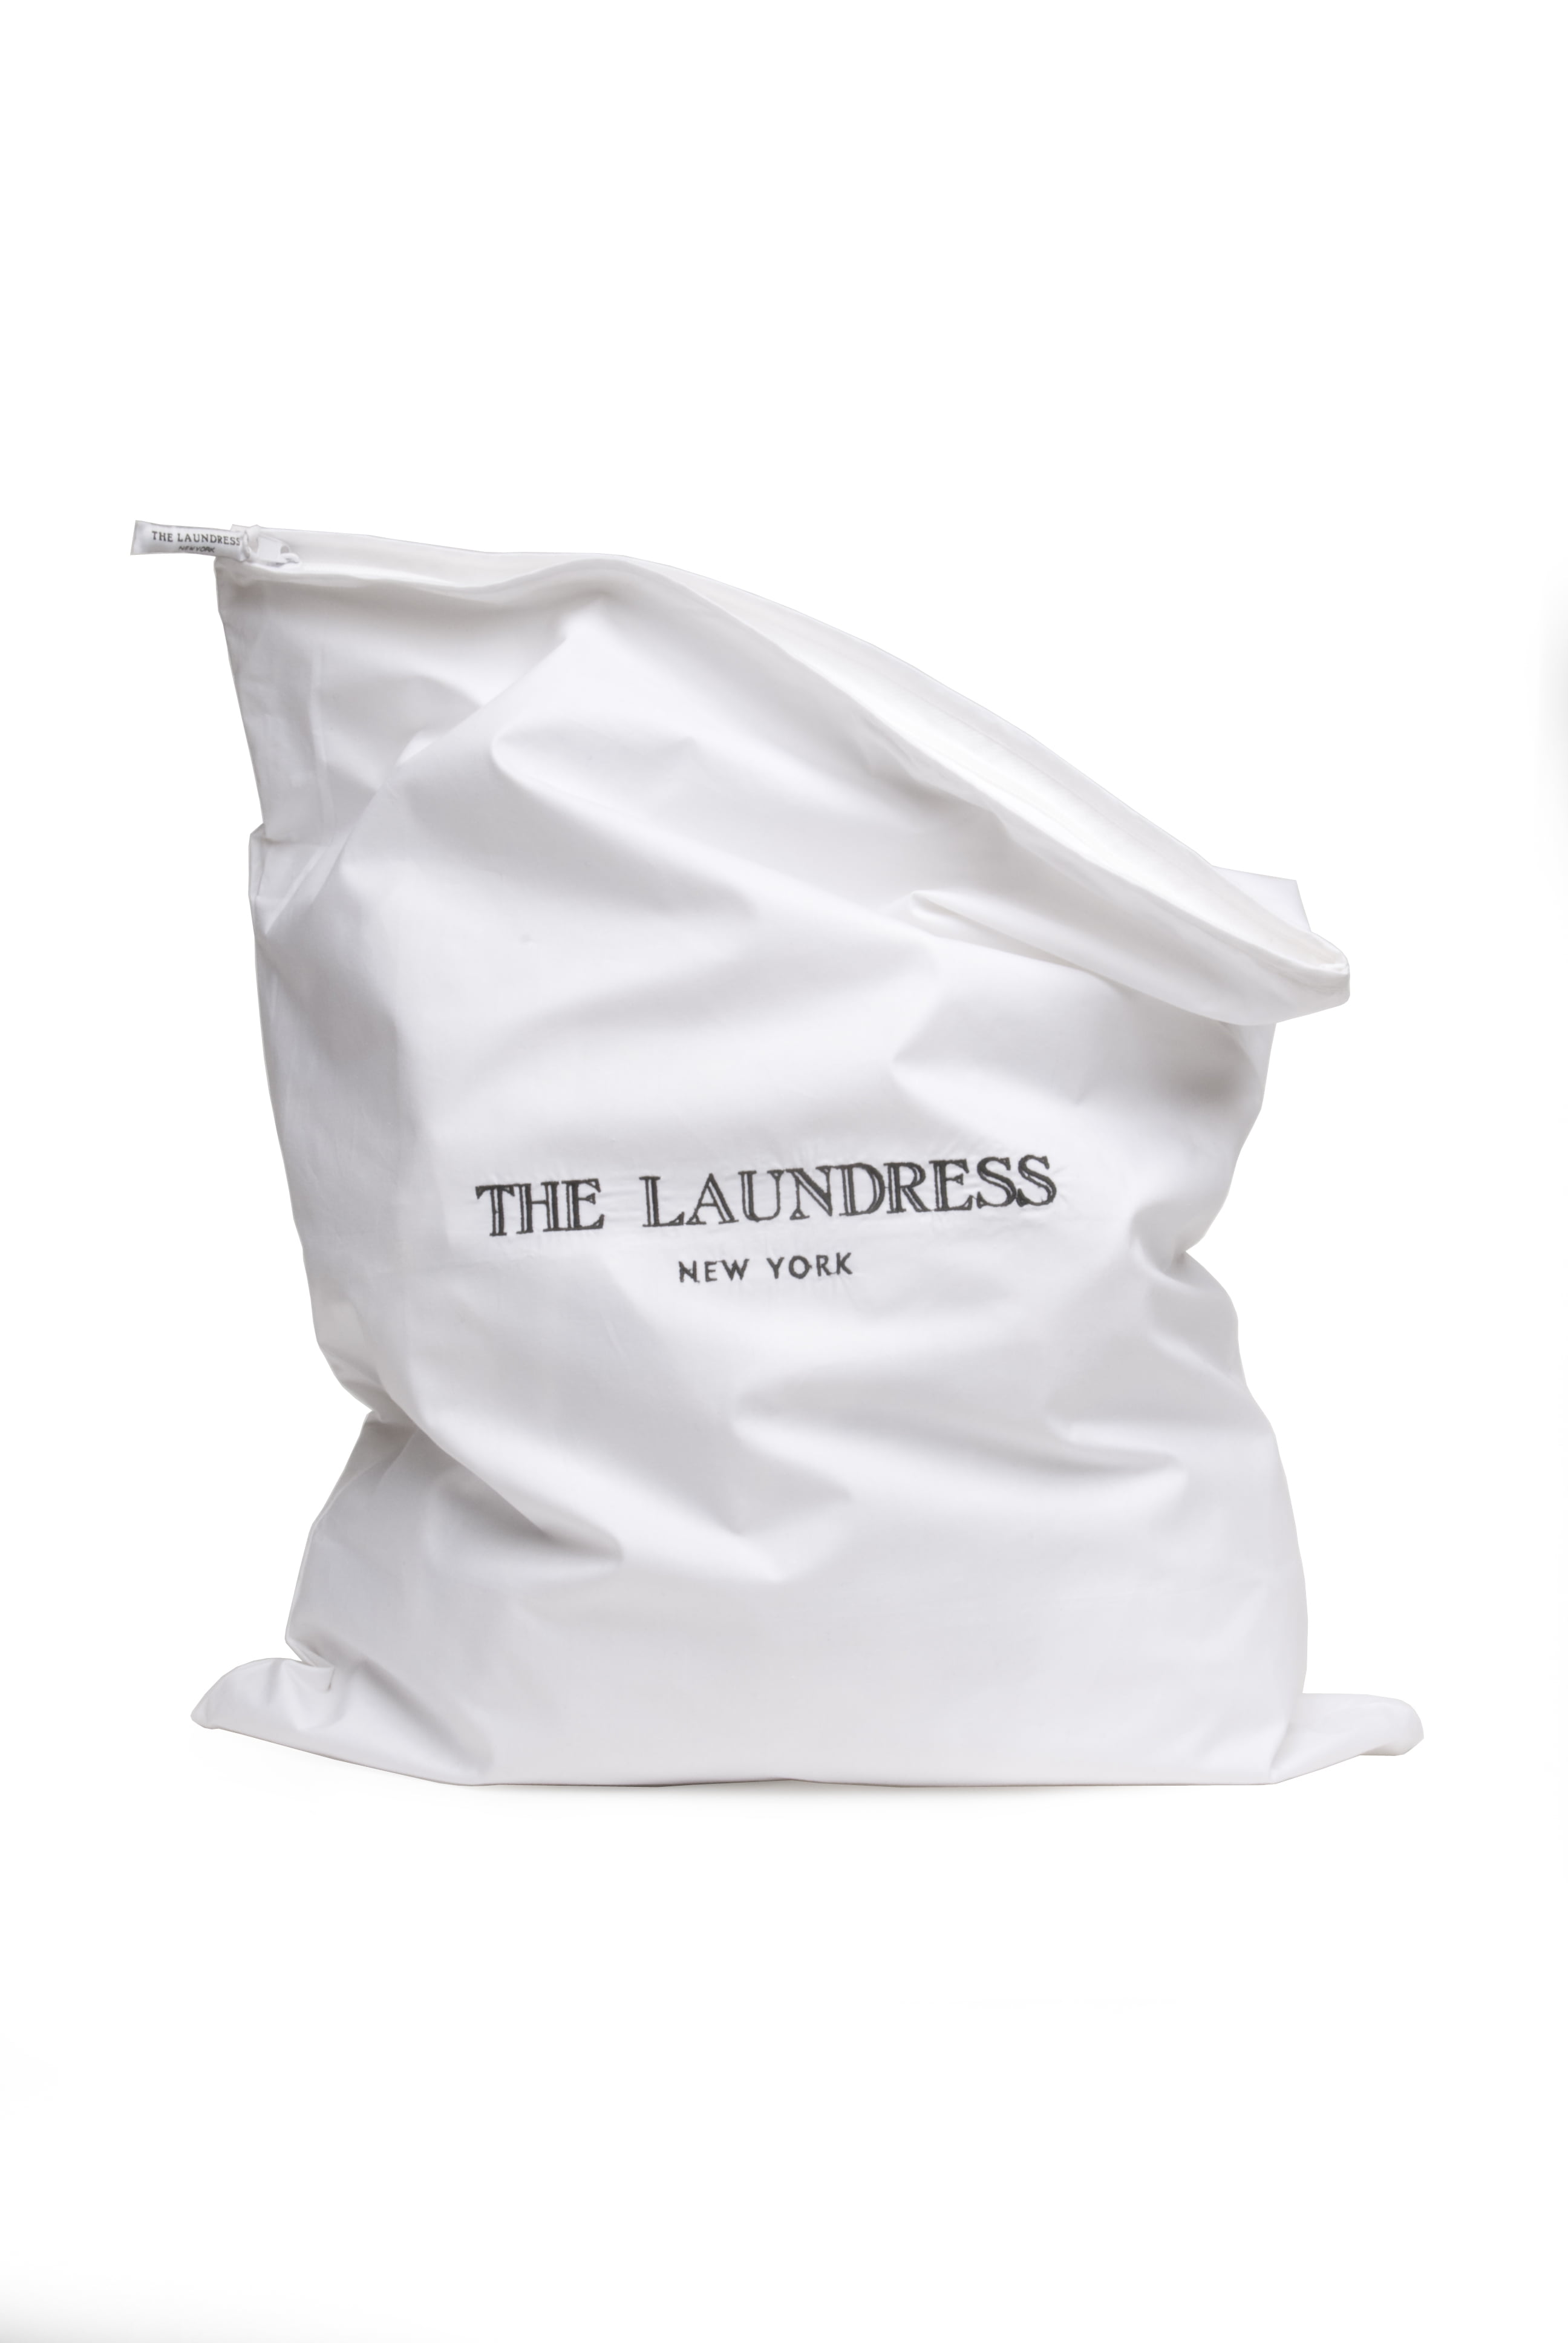 Tips & Tricks for Seasonal Storage – The Laundress